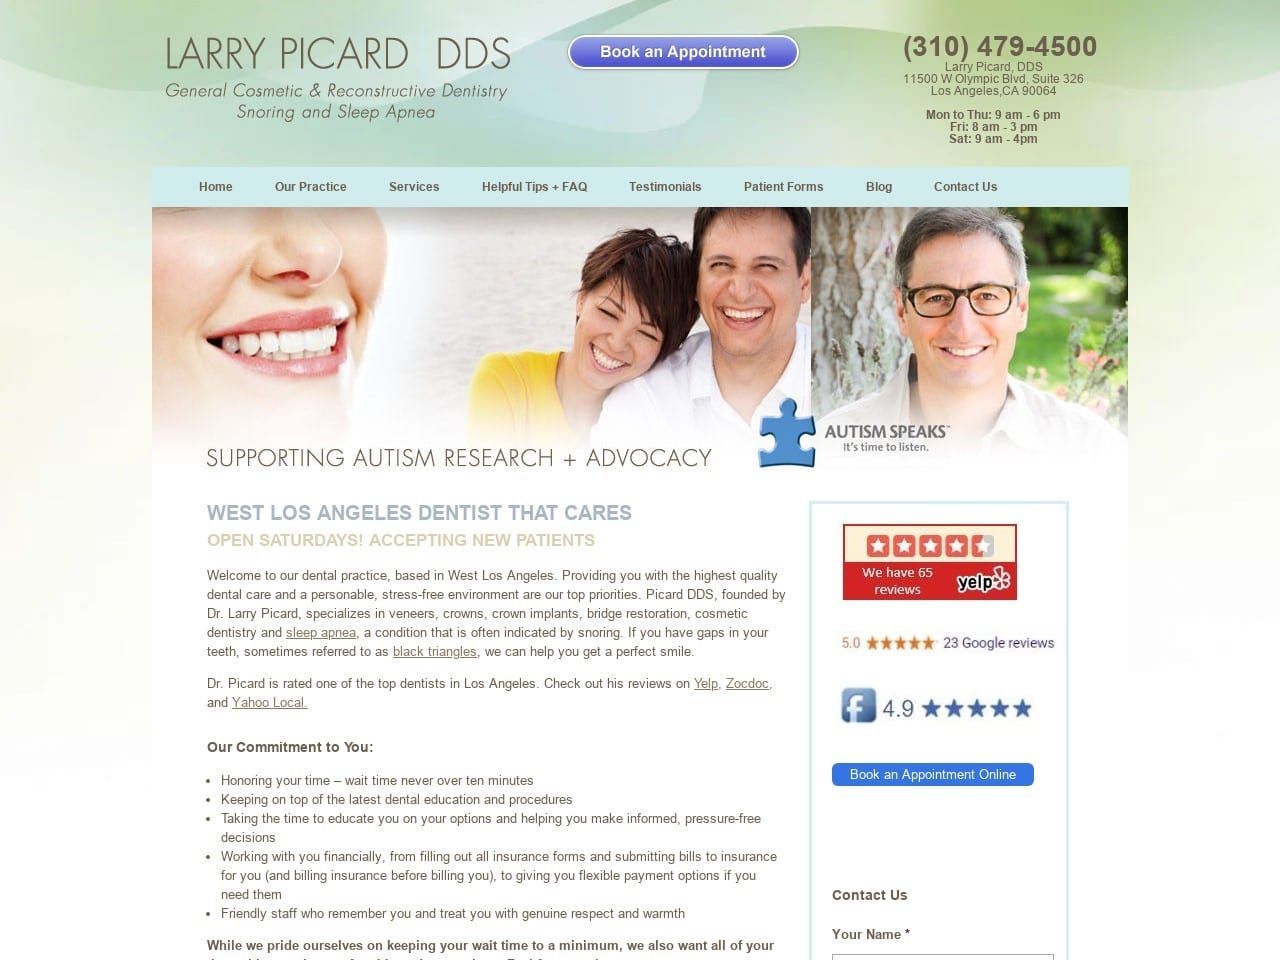 Larry Picard DDS Website Screenshot from picarddds.com